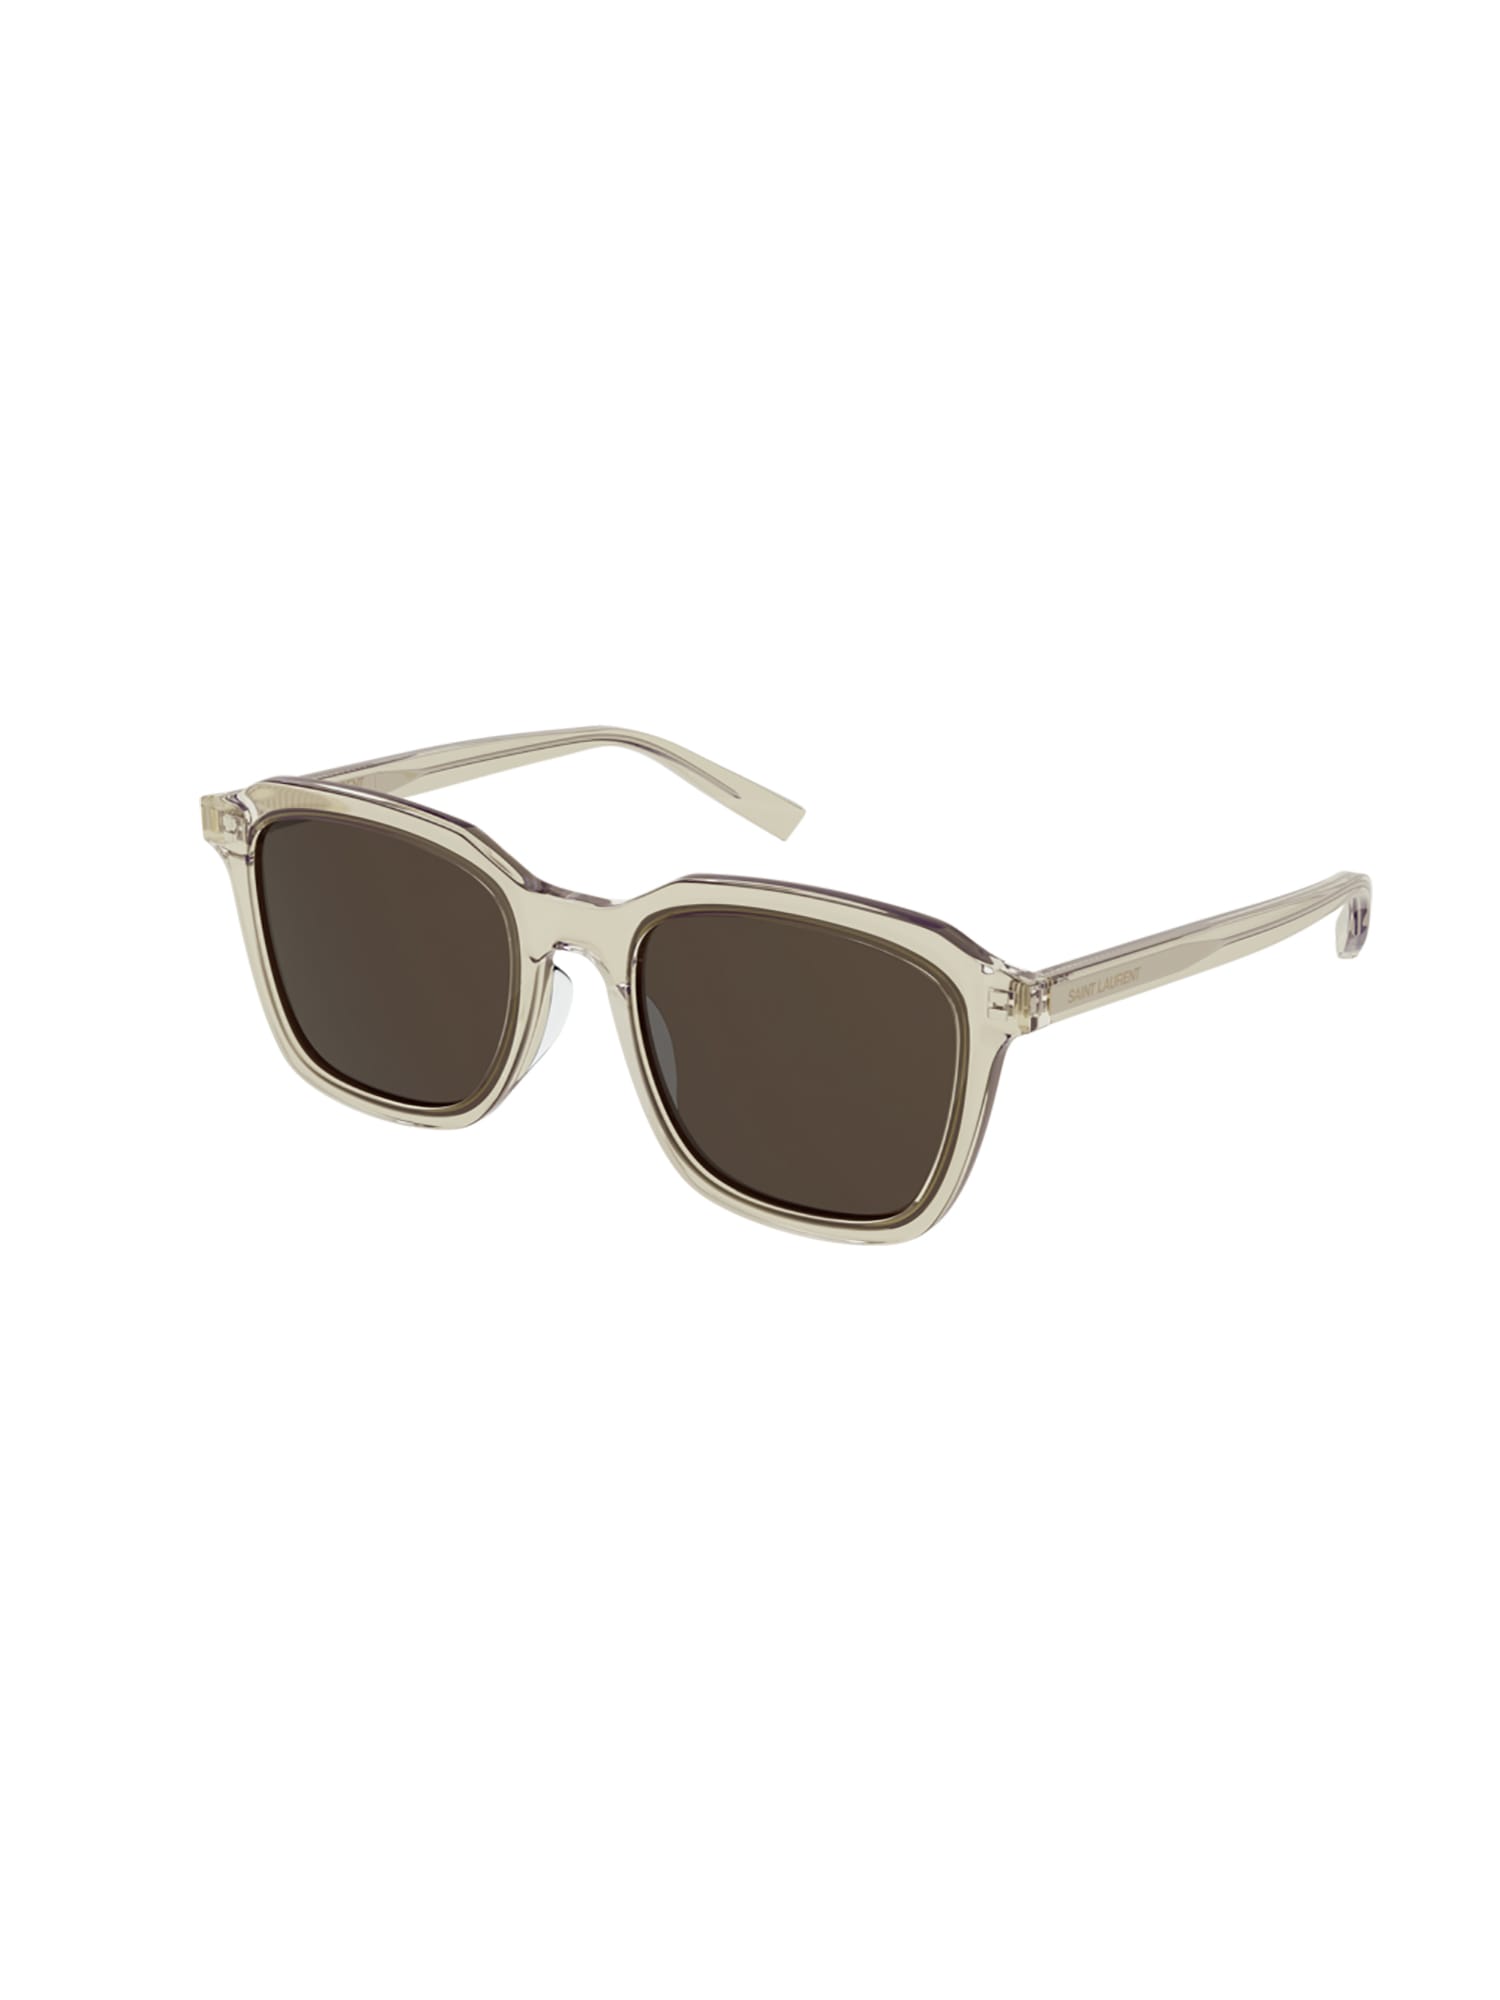 Saint Laurent SL 457 Sunglasses